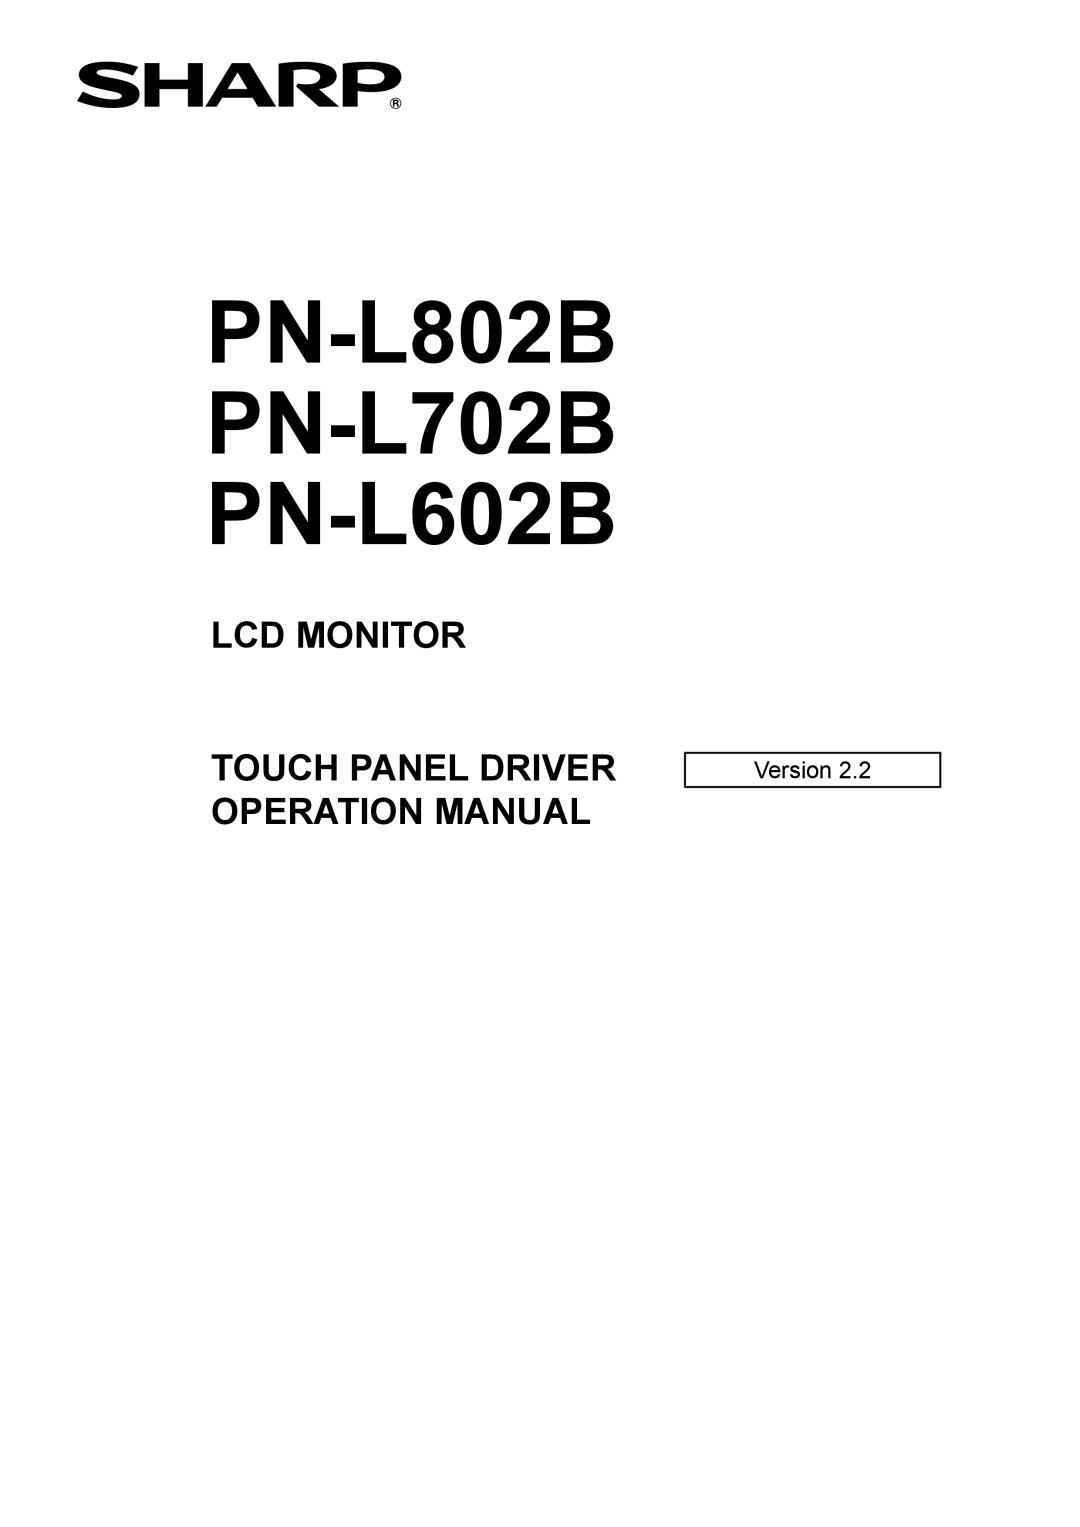 Sharp PNL602B operation manual PN-L802B PN-L702B PN-L602B, Lcd Monitor, Touch Panel Driver Operation Manual, Version 